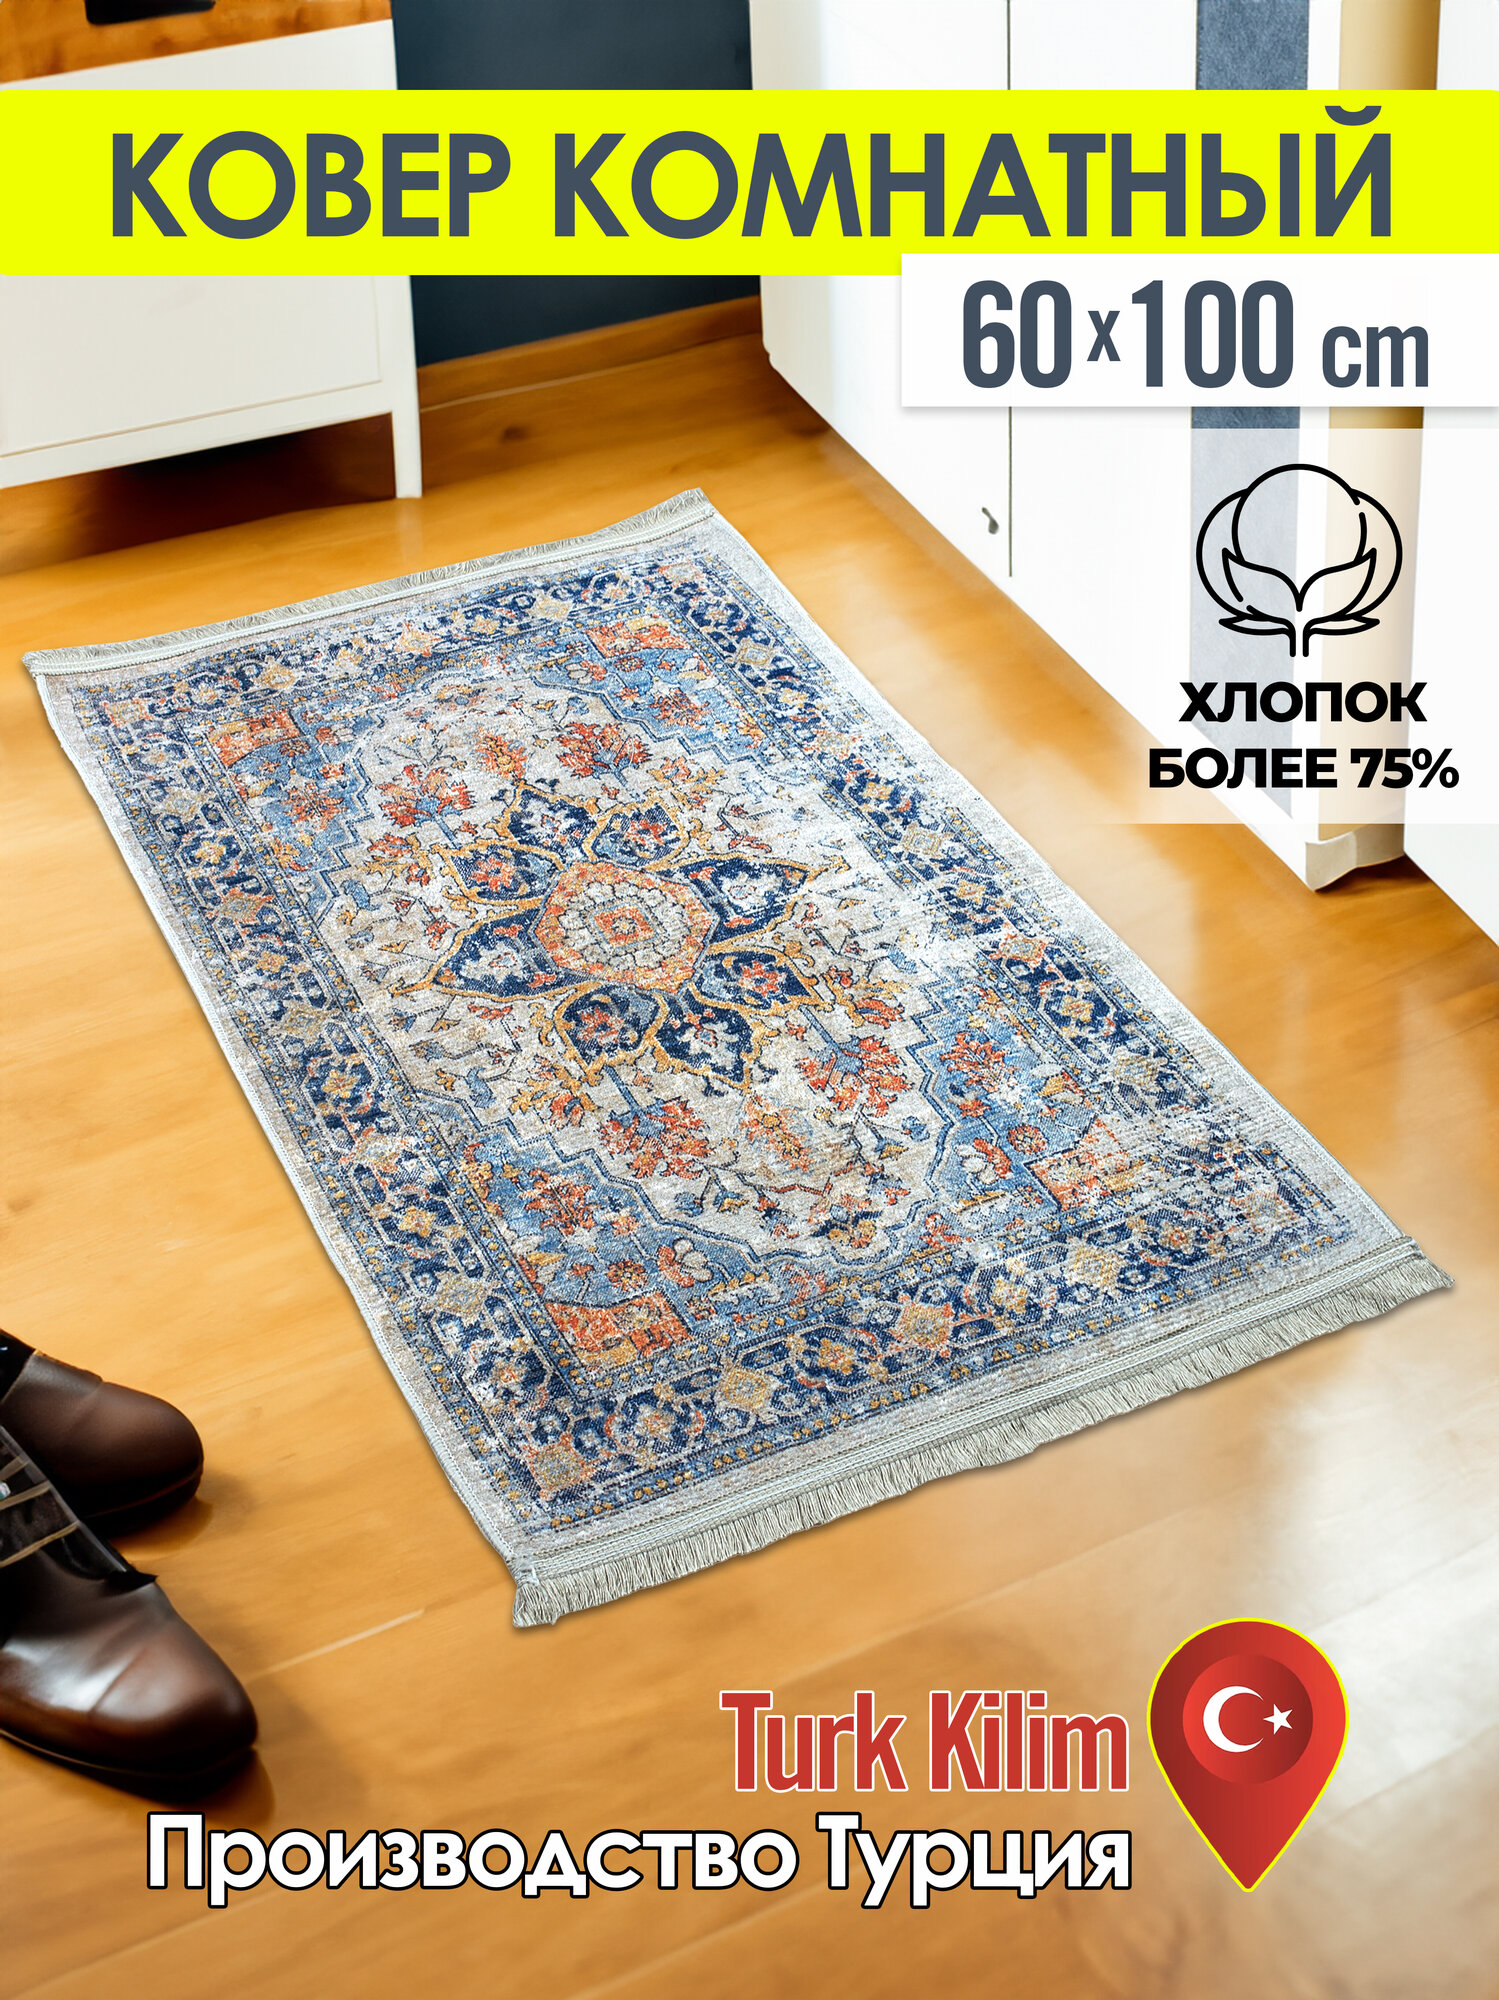 Турецкий комнатный ковер килим из хлопка Turk-kilim